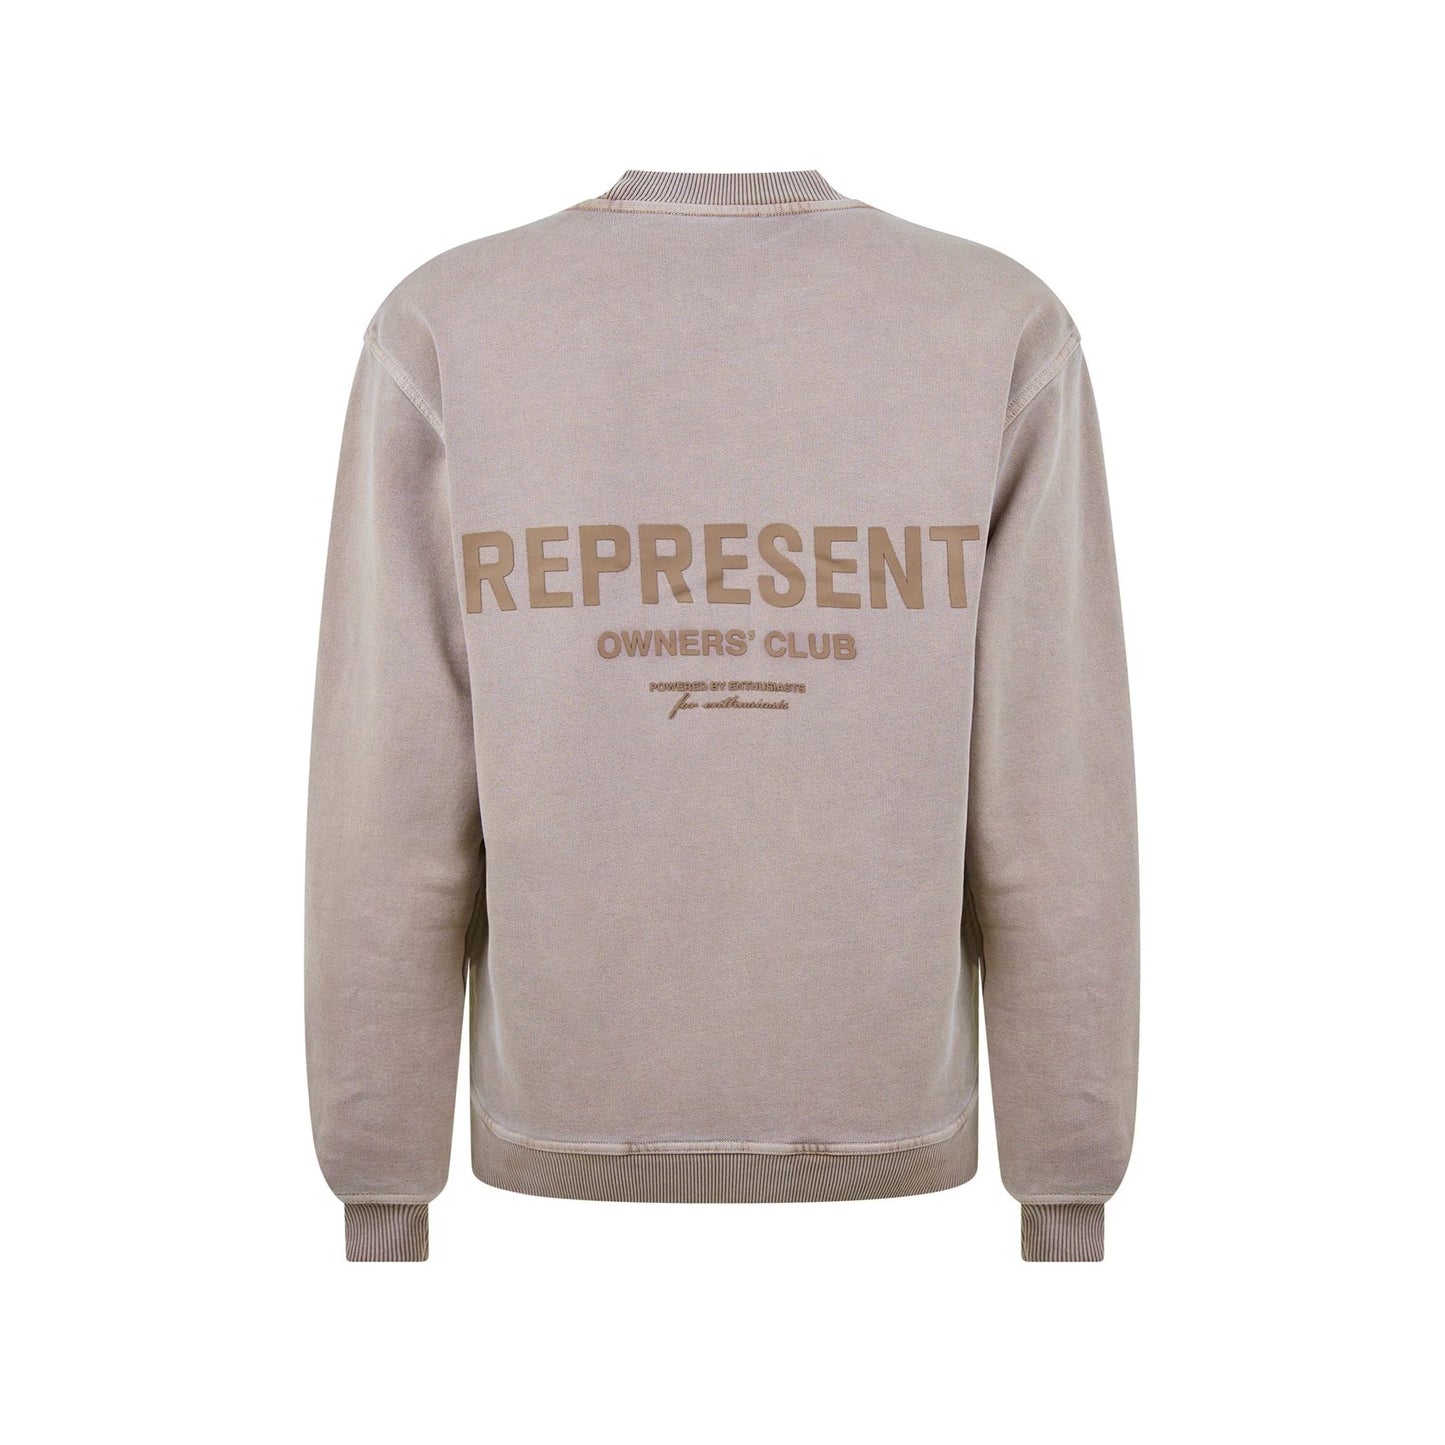 Represent Owners Club Sweatshirt - 243 Mashroom - Escape Menswear